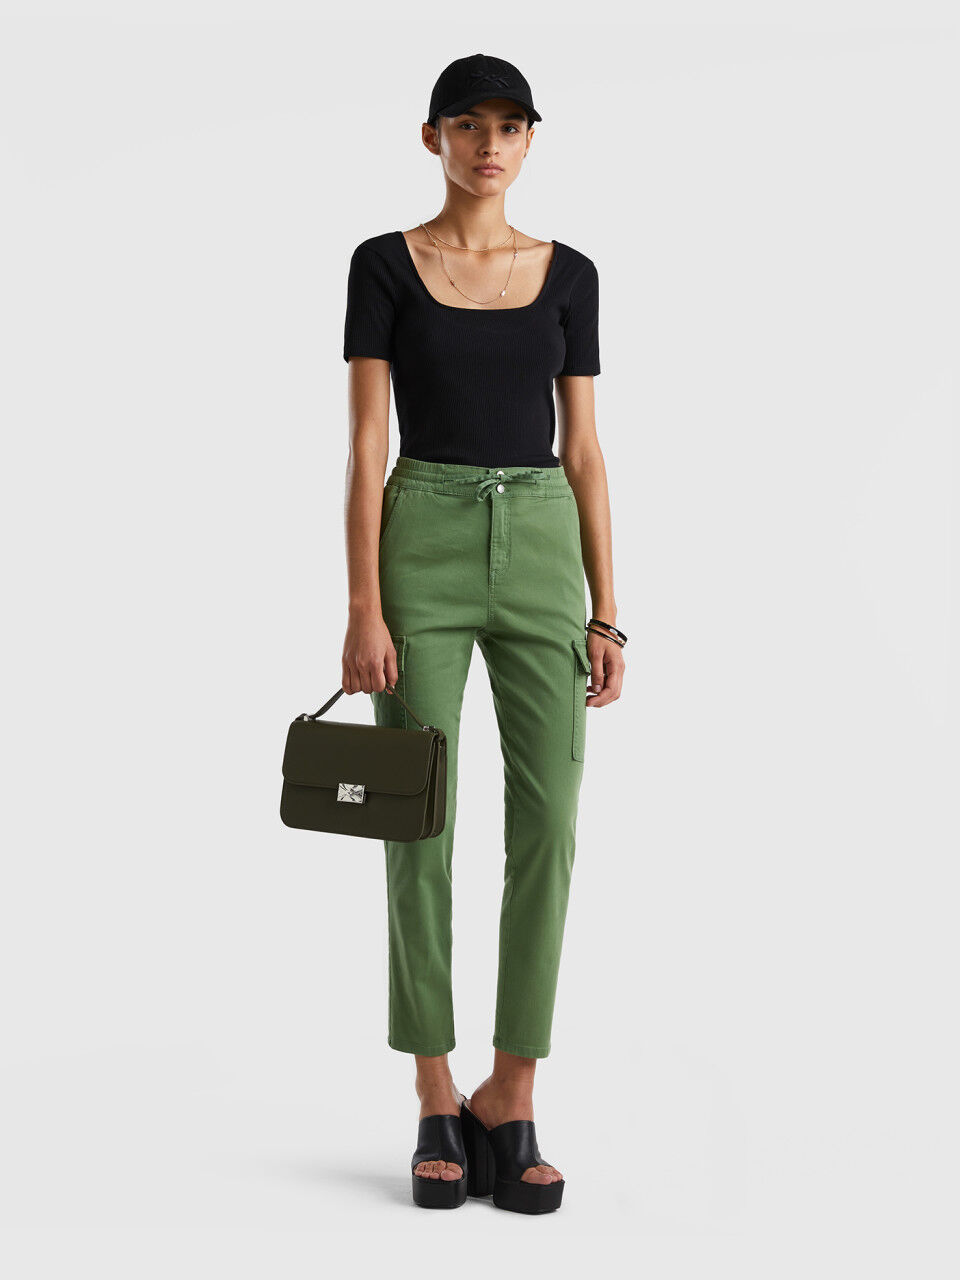 Buy Women Khaki Slim Fit Solid Business Casual Trousers Online  274592   Allen Solly